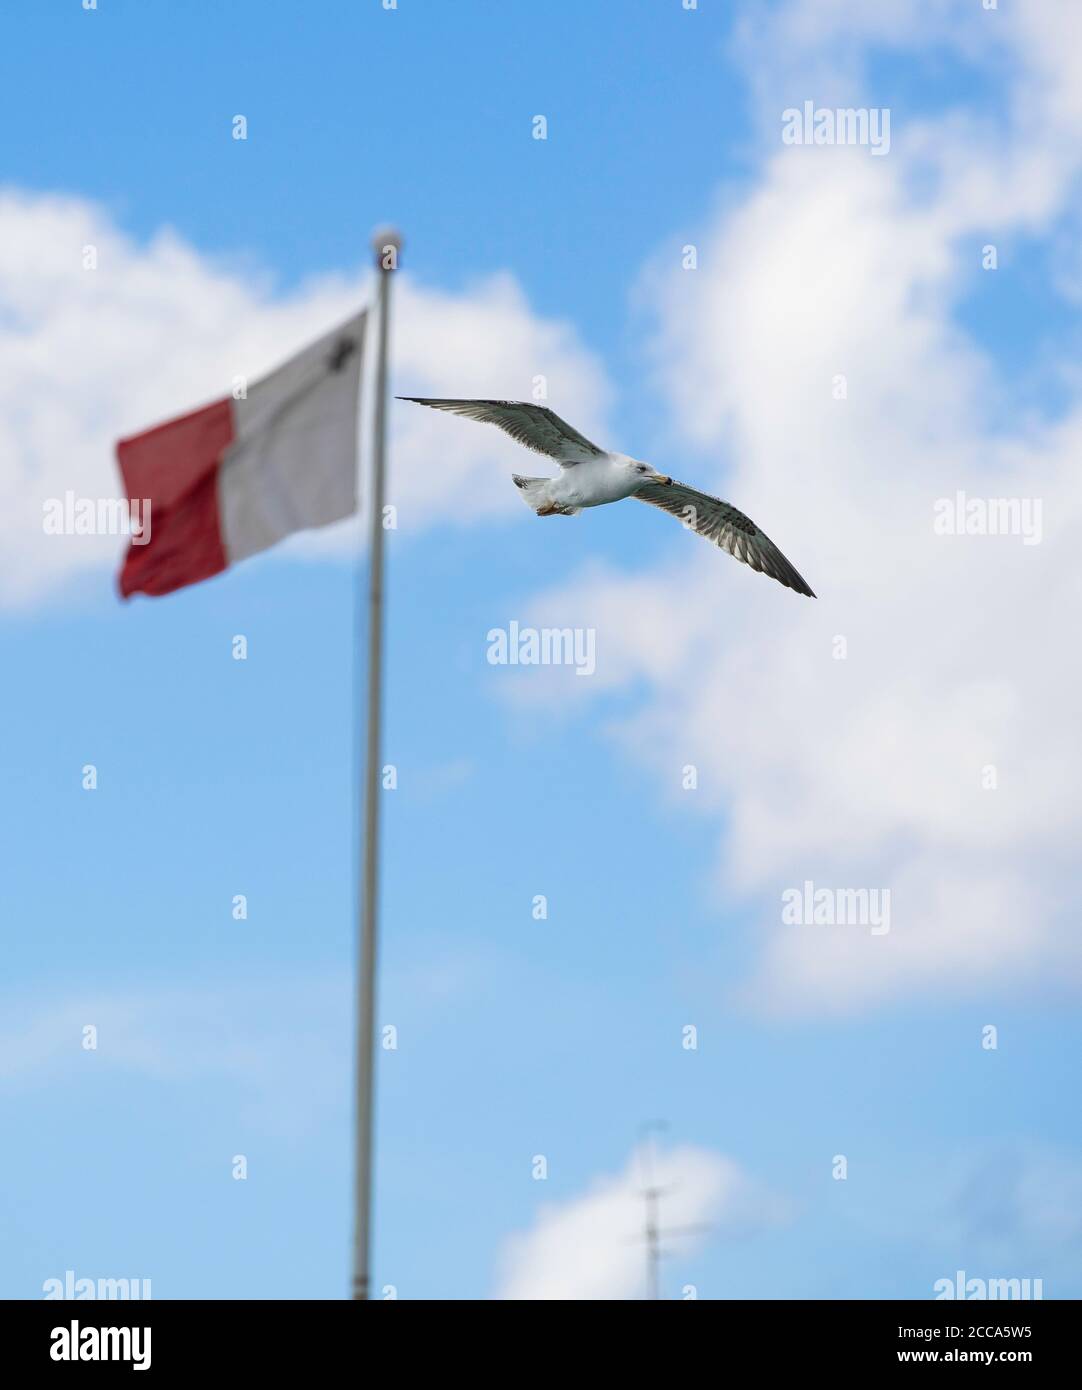 Maltese flag and white seagull flying in the blue sky background. Malta flag Stock Photo